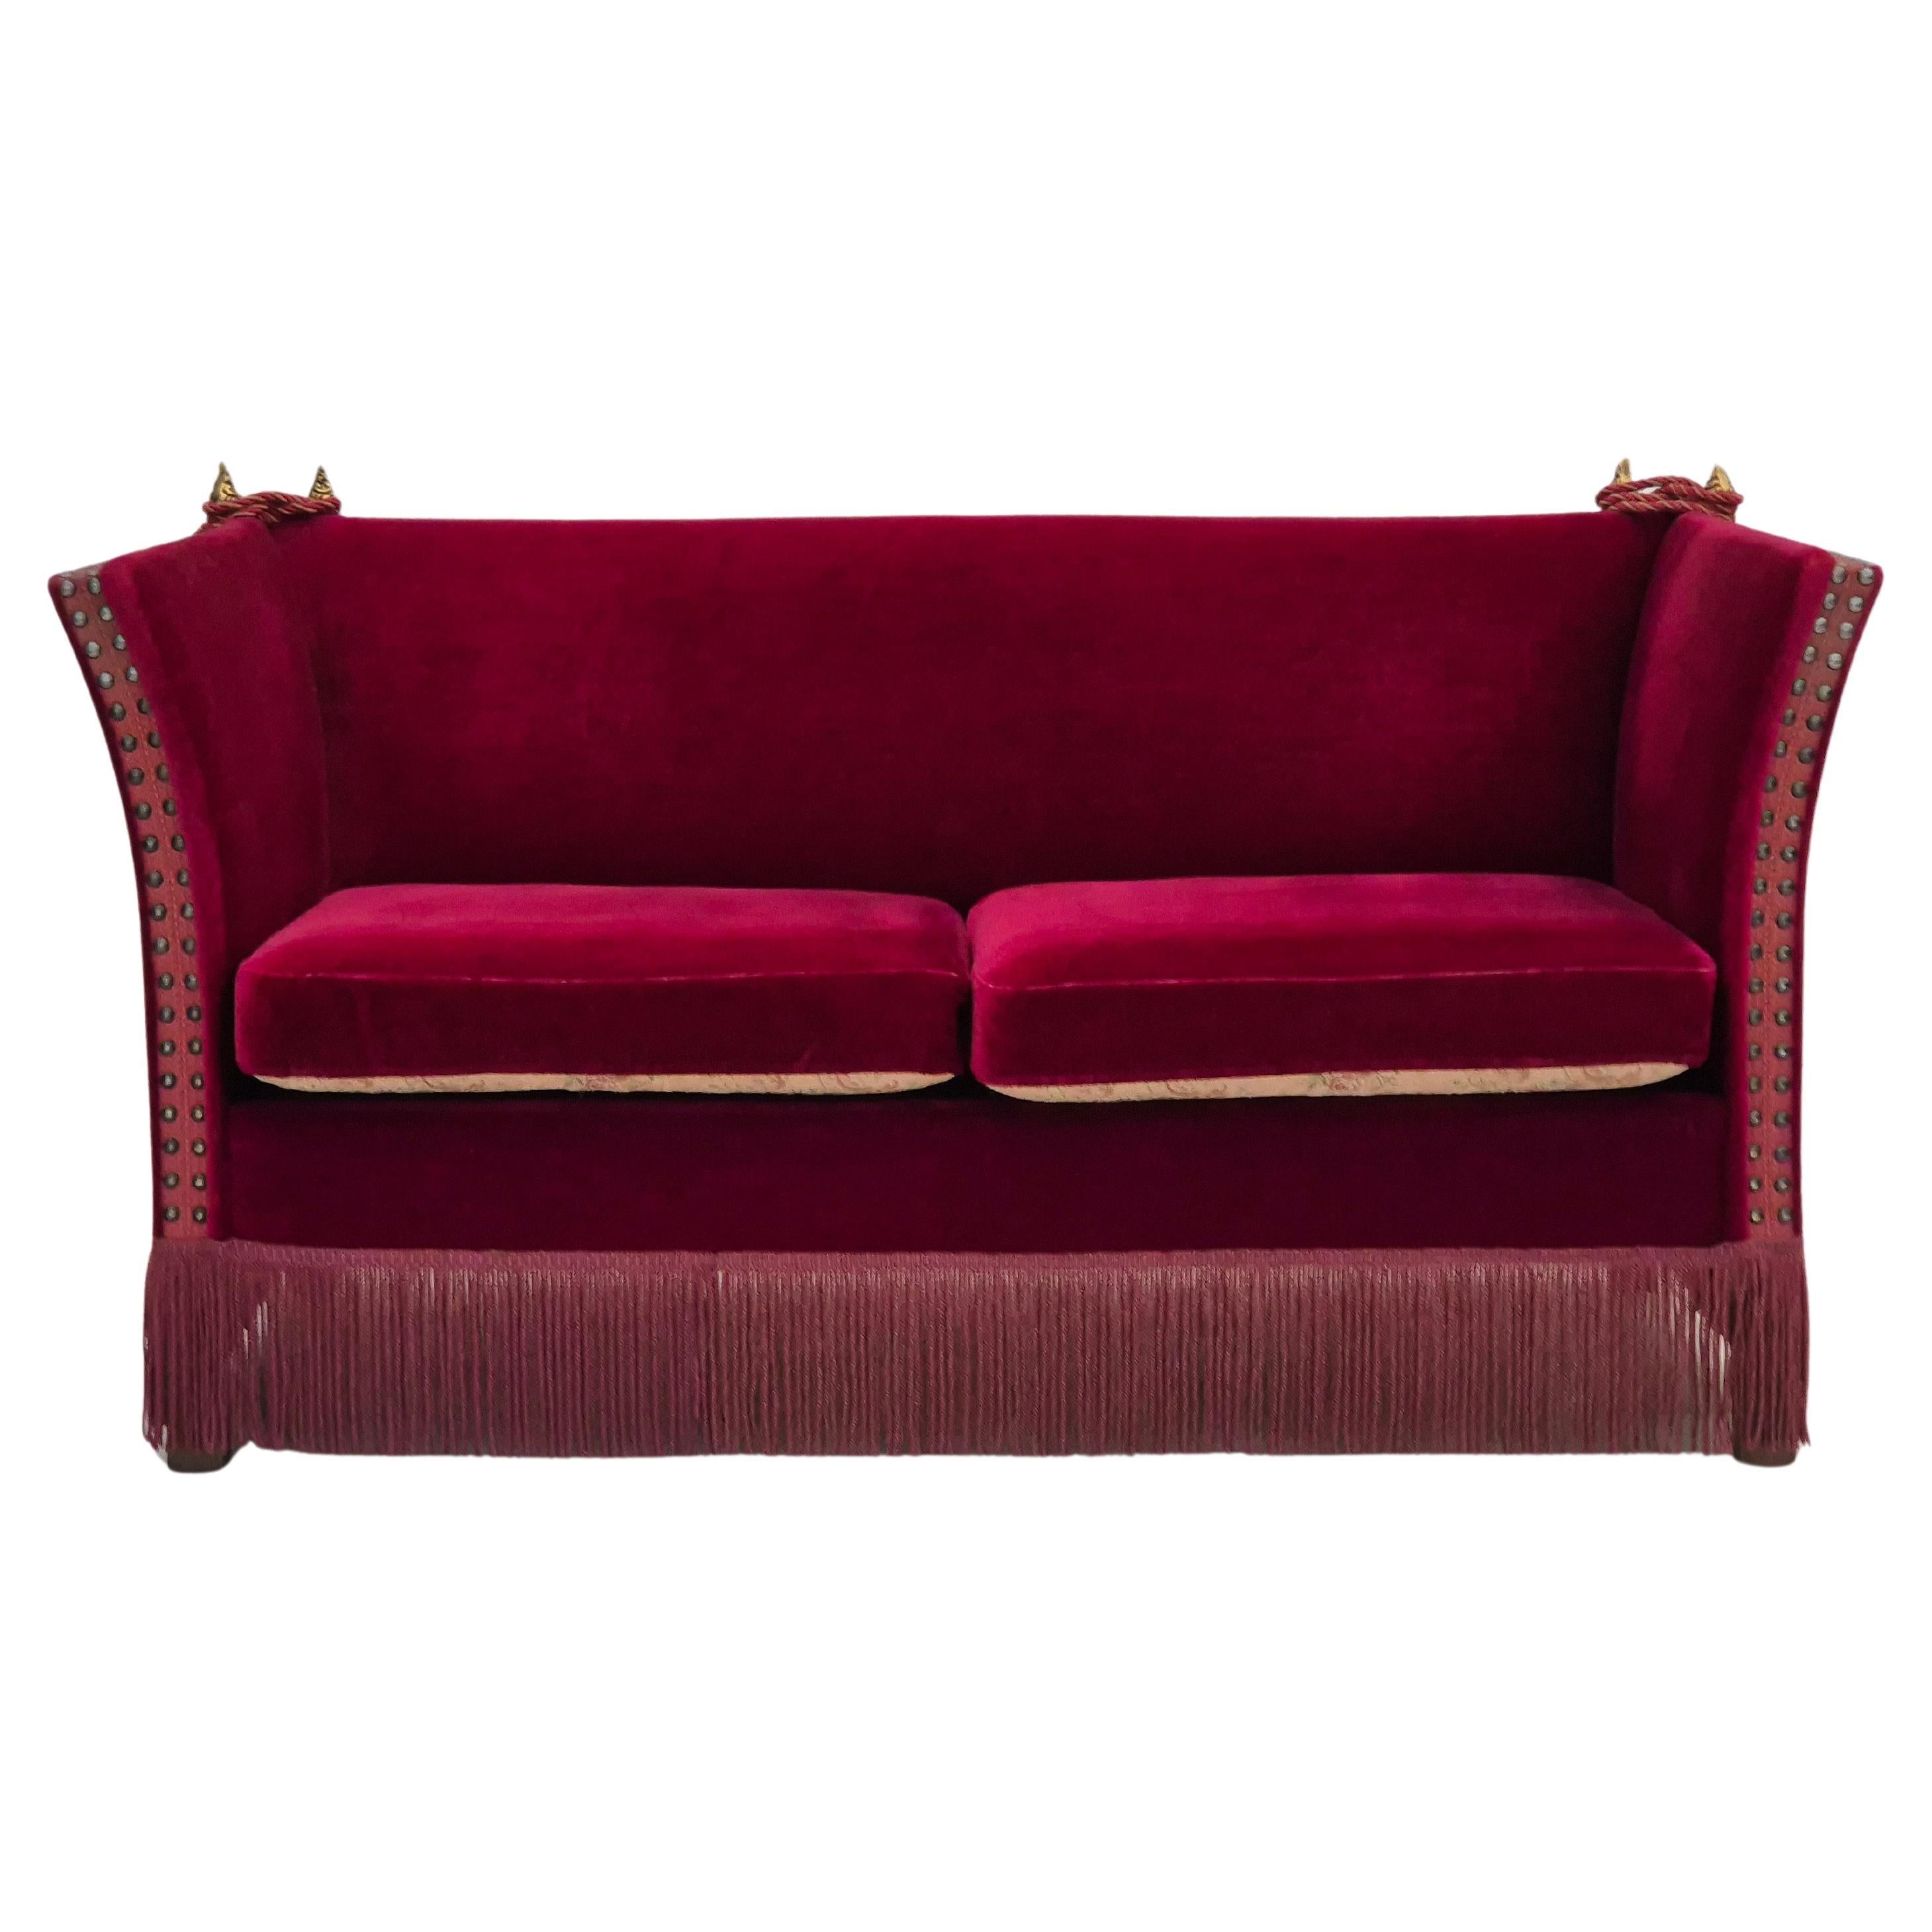 1960s, Danish "Spanish" sofa, original condition, furniture velour, ash wood. For Sale